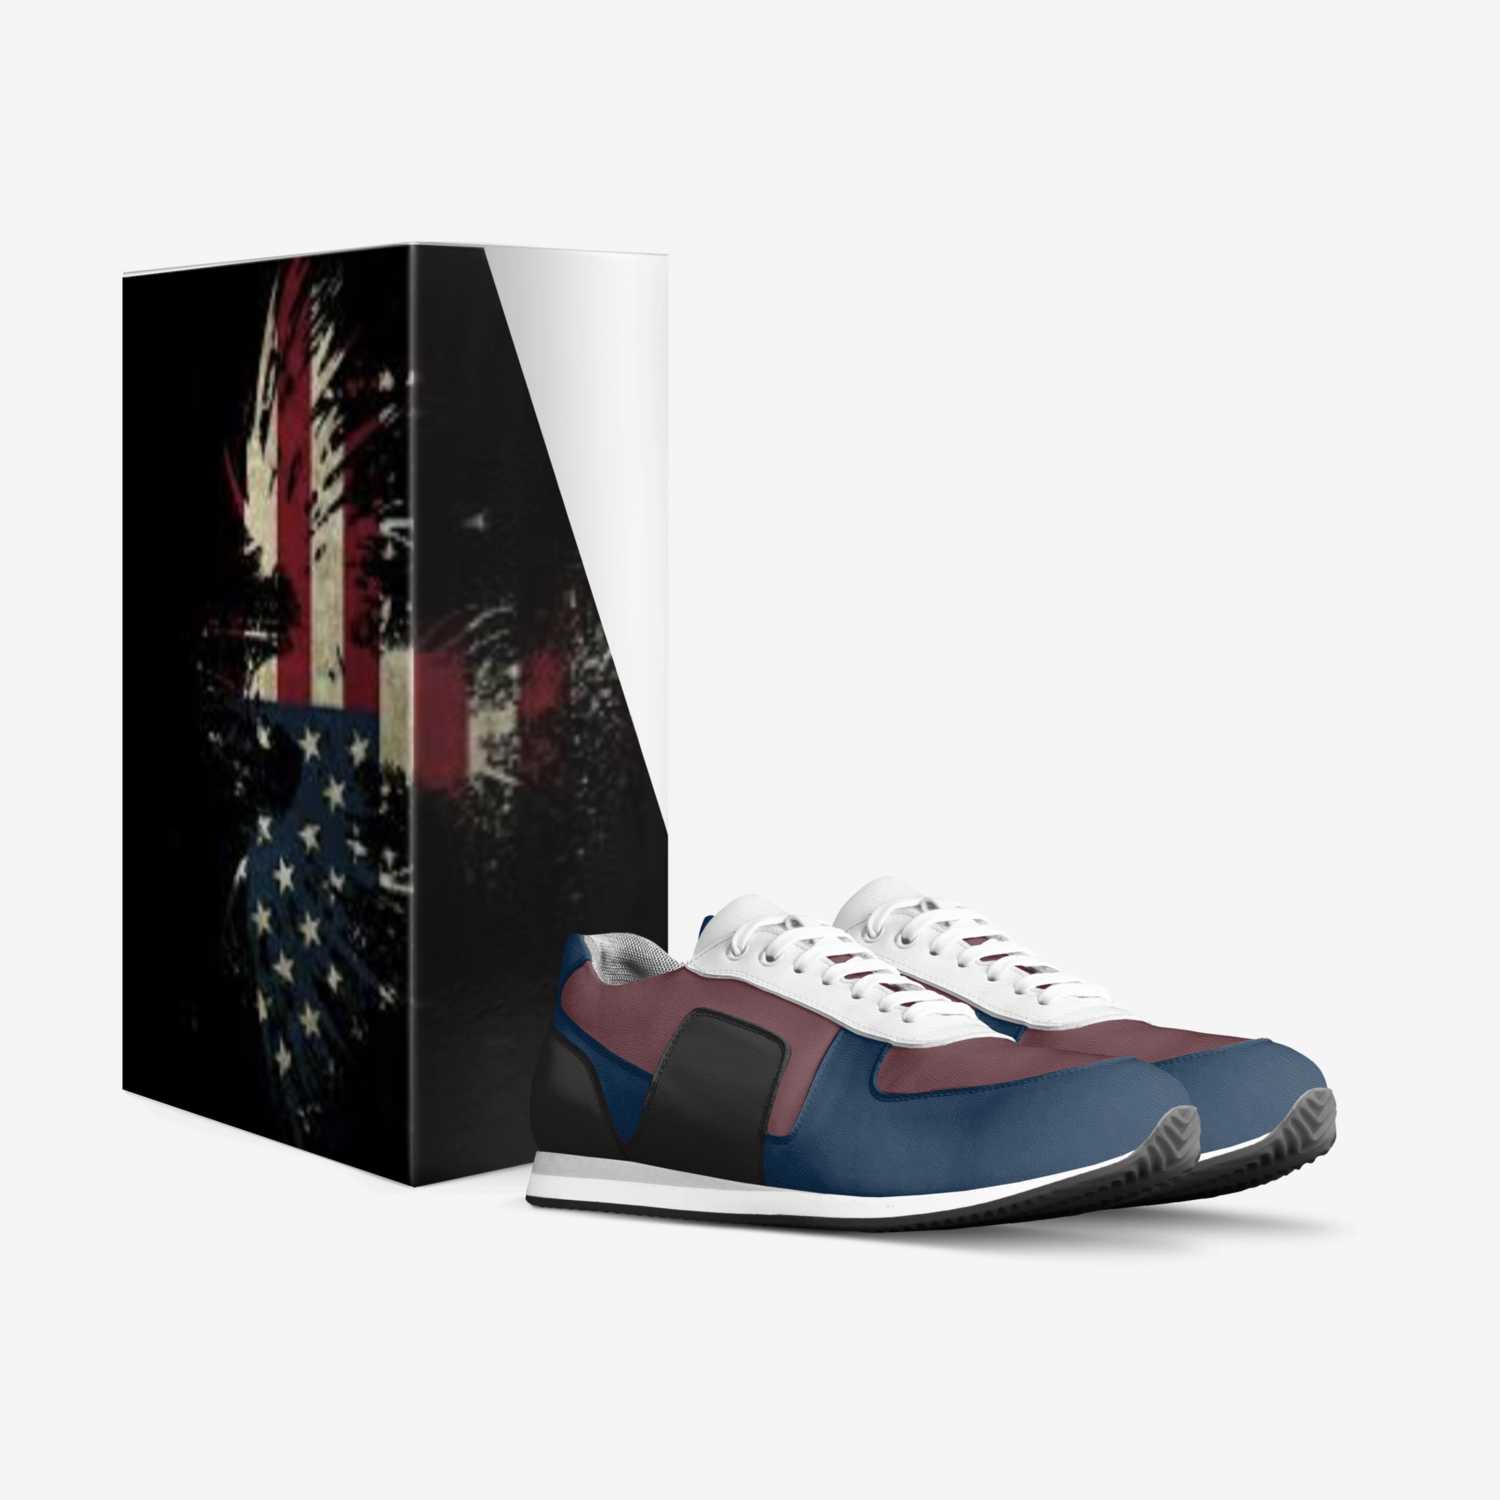 Dark America custom made in Italy shoes by Gary Thomas | Box view